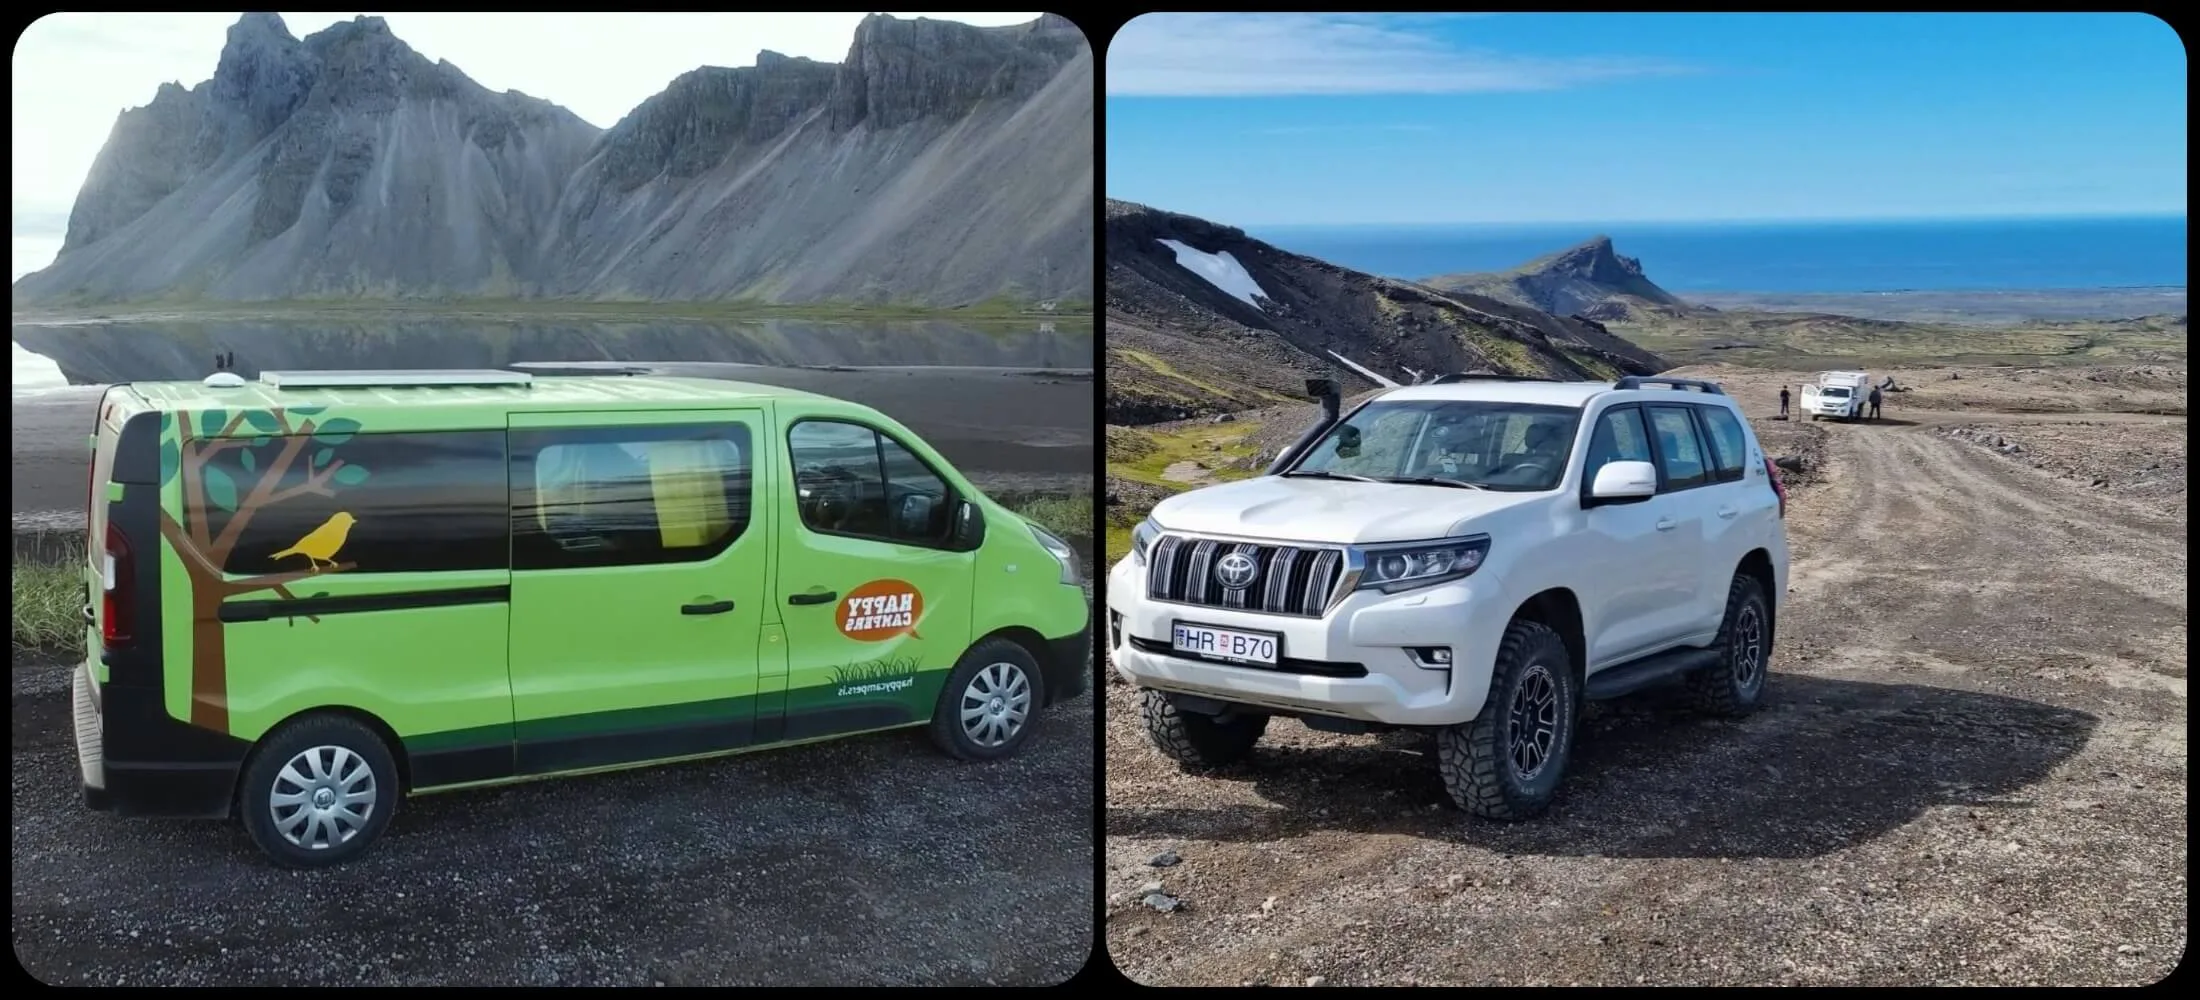 Campervan or Car in Iceland? A Big Comparison